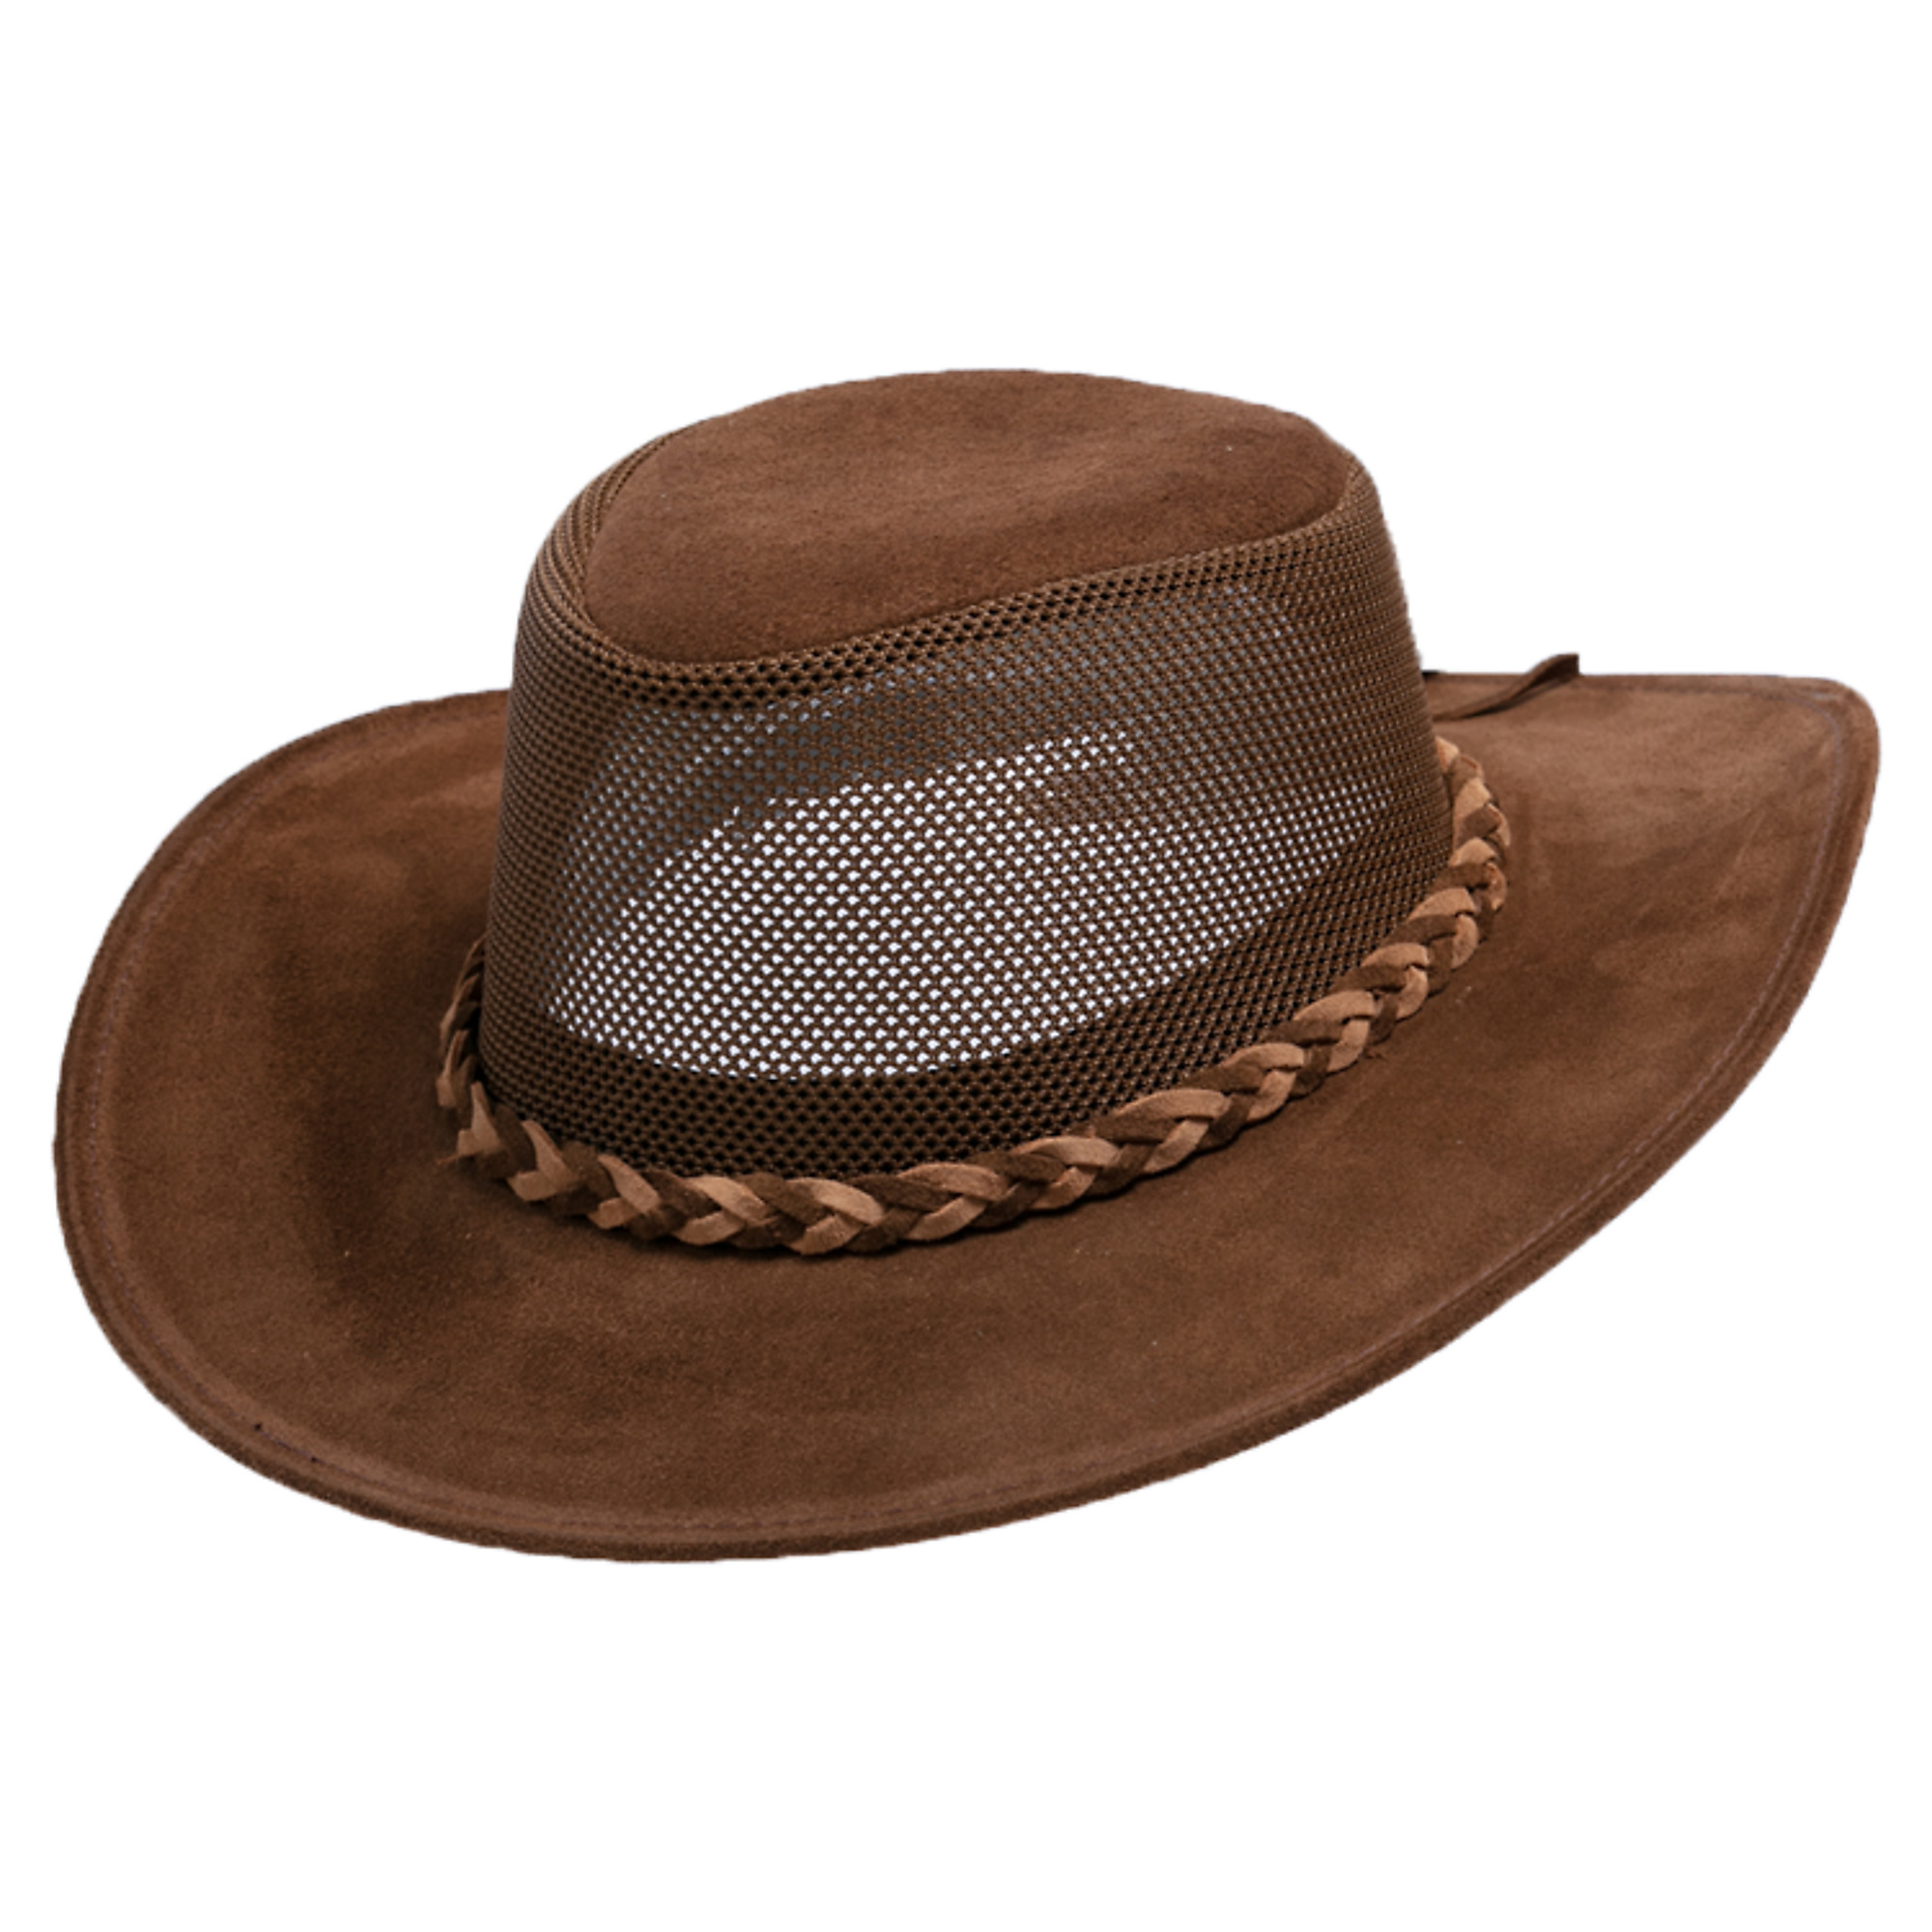 Henschel Hat Company, Brown Wrangler Leather Breezer, Size M, Color Brown, Hat Style Hat, Model 0208-81M